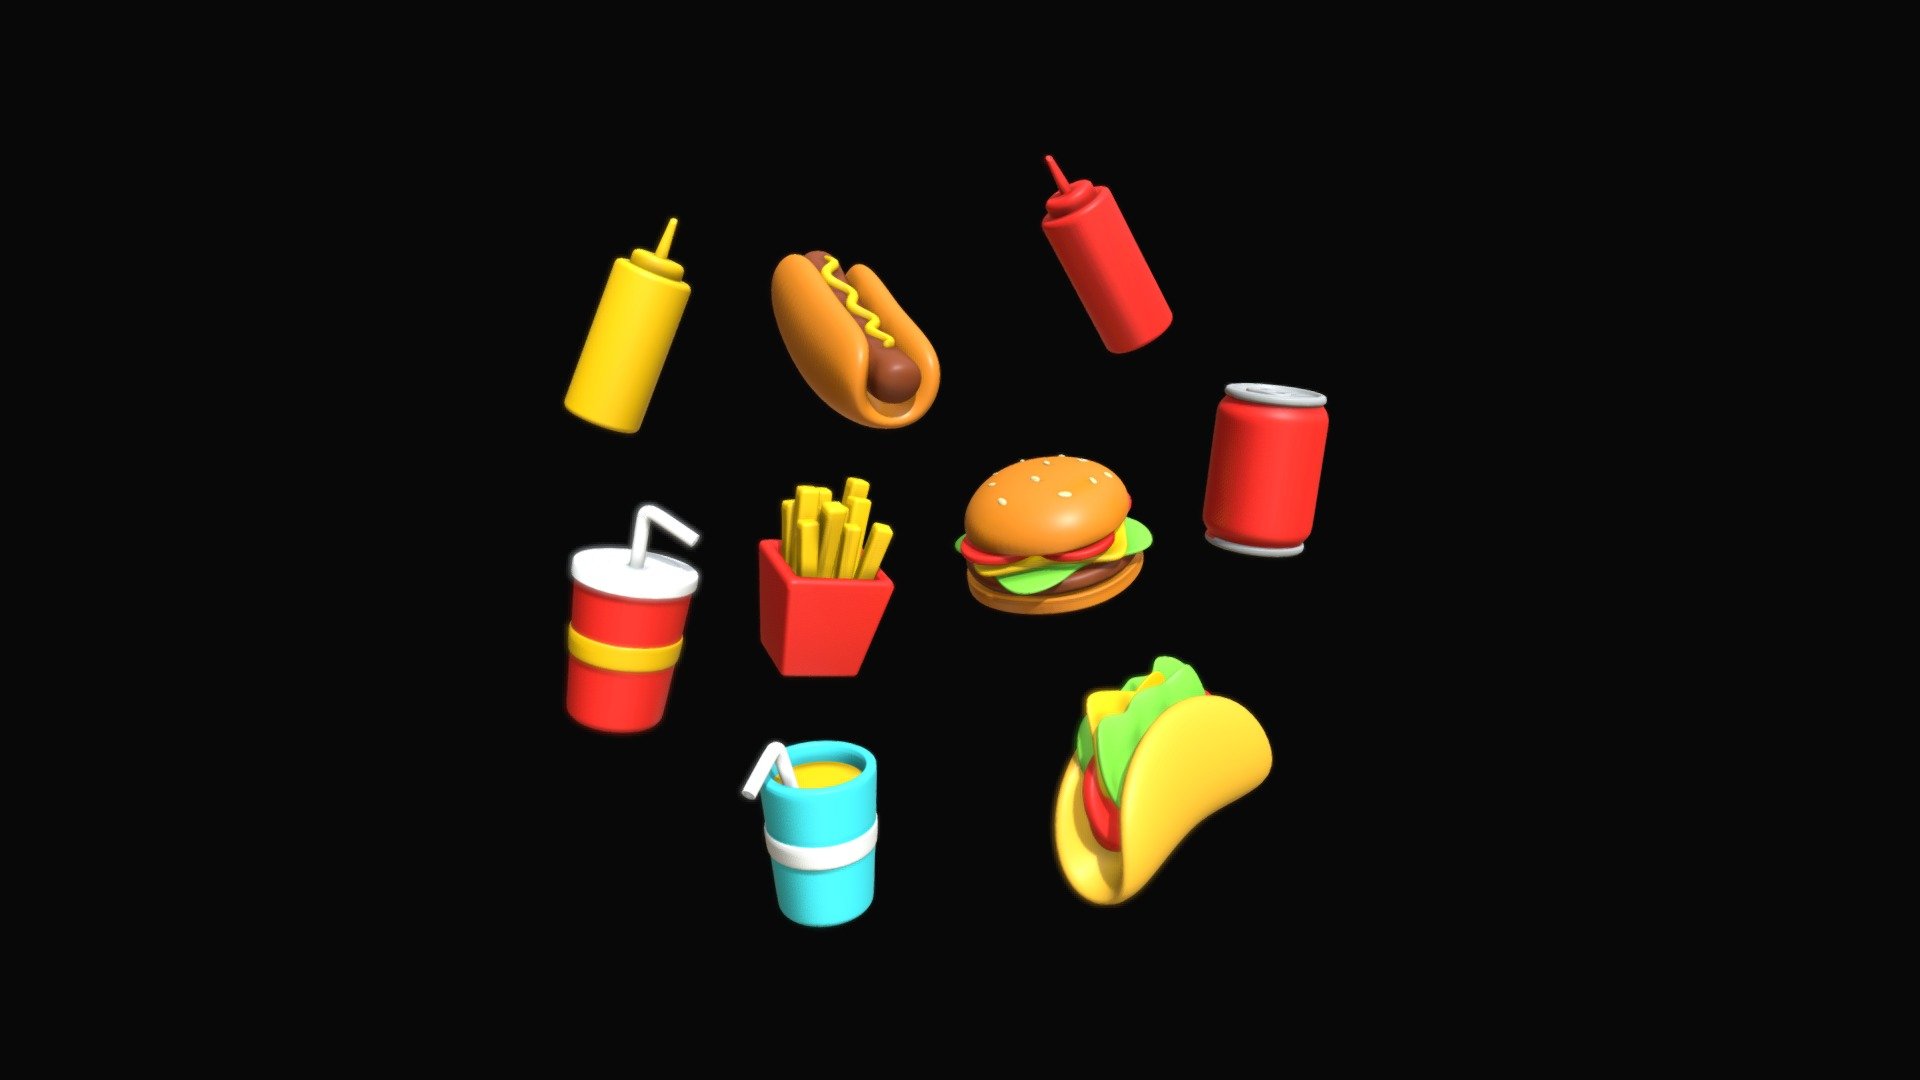 Food And Drink ( Fast Food ) Icon Pack Bundles
- Burger
- HotDog
- Taco
- Softdrink
- Juice
- Soda
- Mustard
- Ketchup
- French Fries
3D icon pack bundle - Food And Drink ( Fast Food ) Icon Pack Bundles - Buy Royalty Free 3D model by tofanarahman 3d model